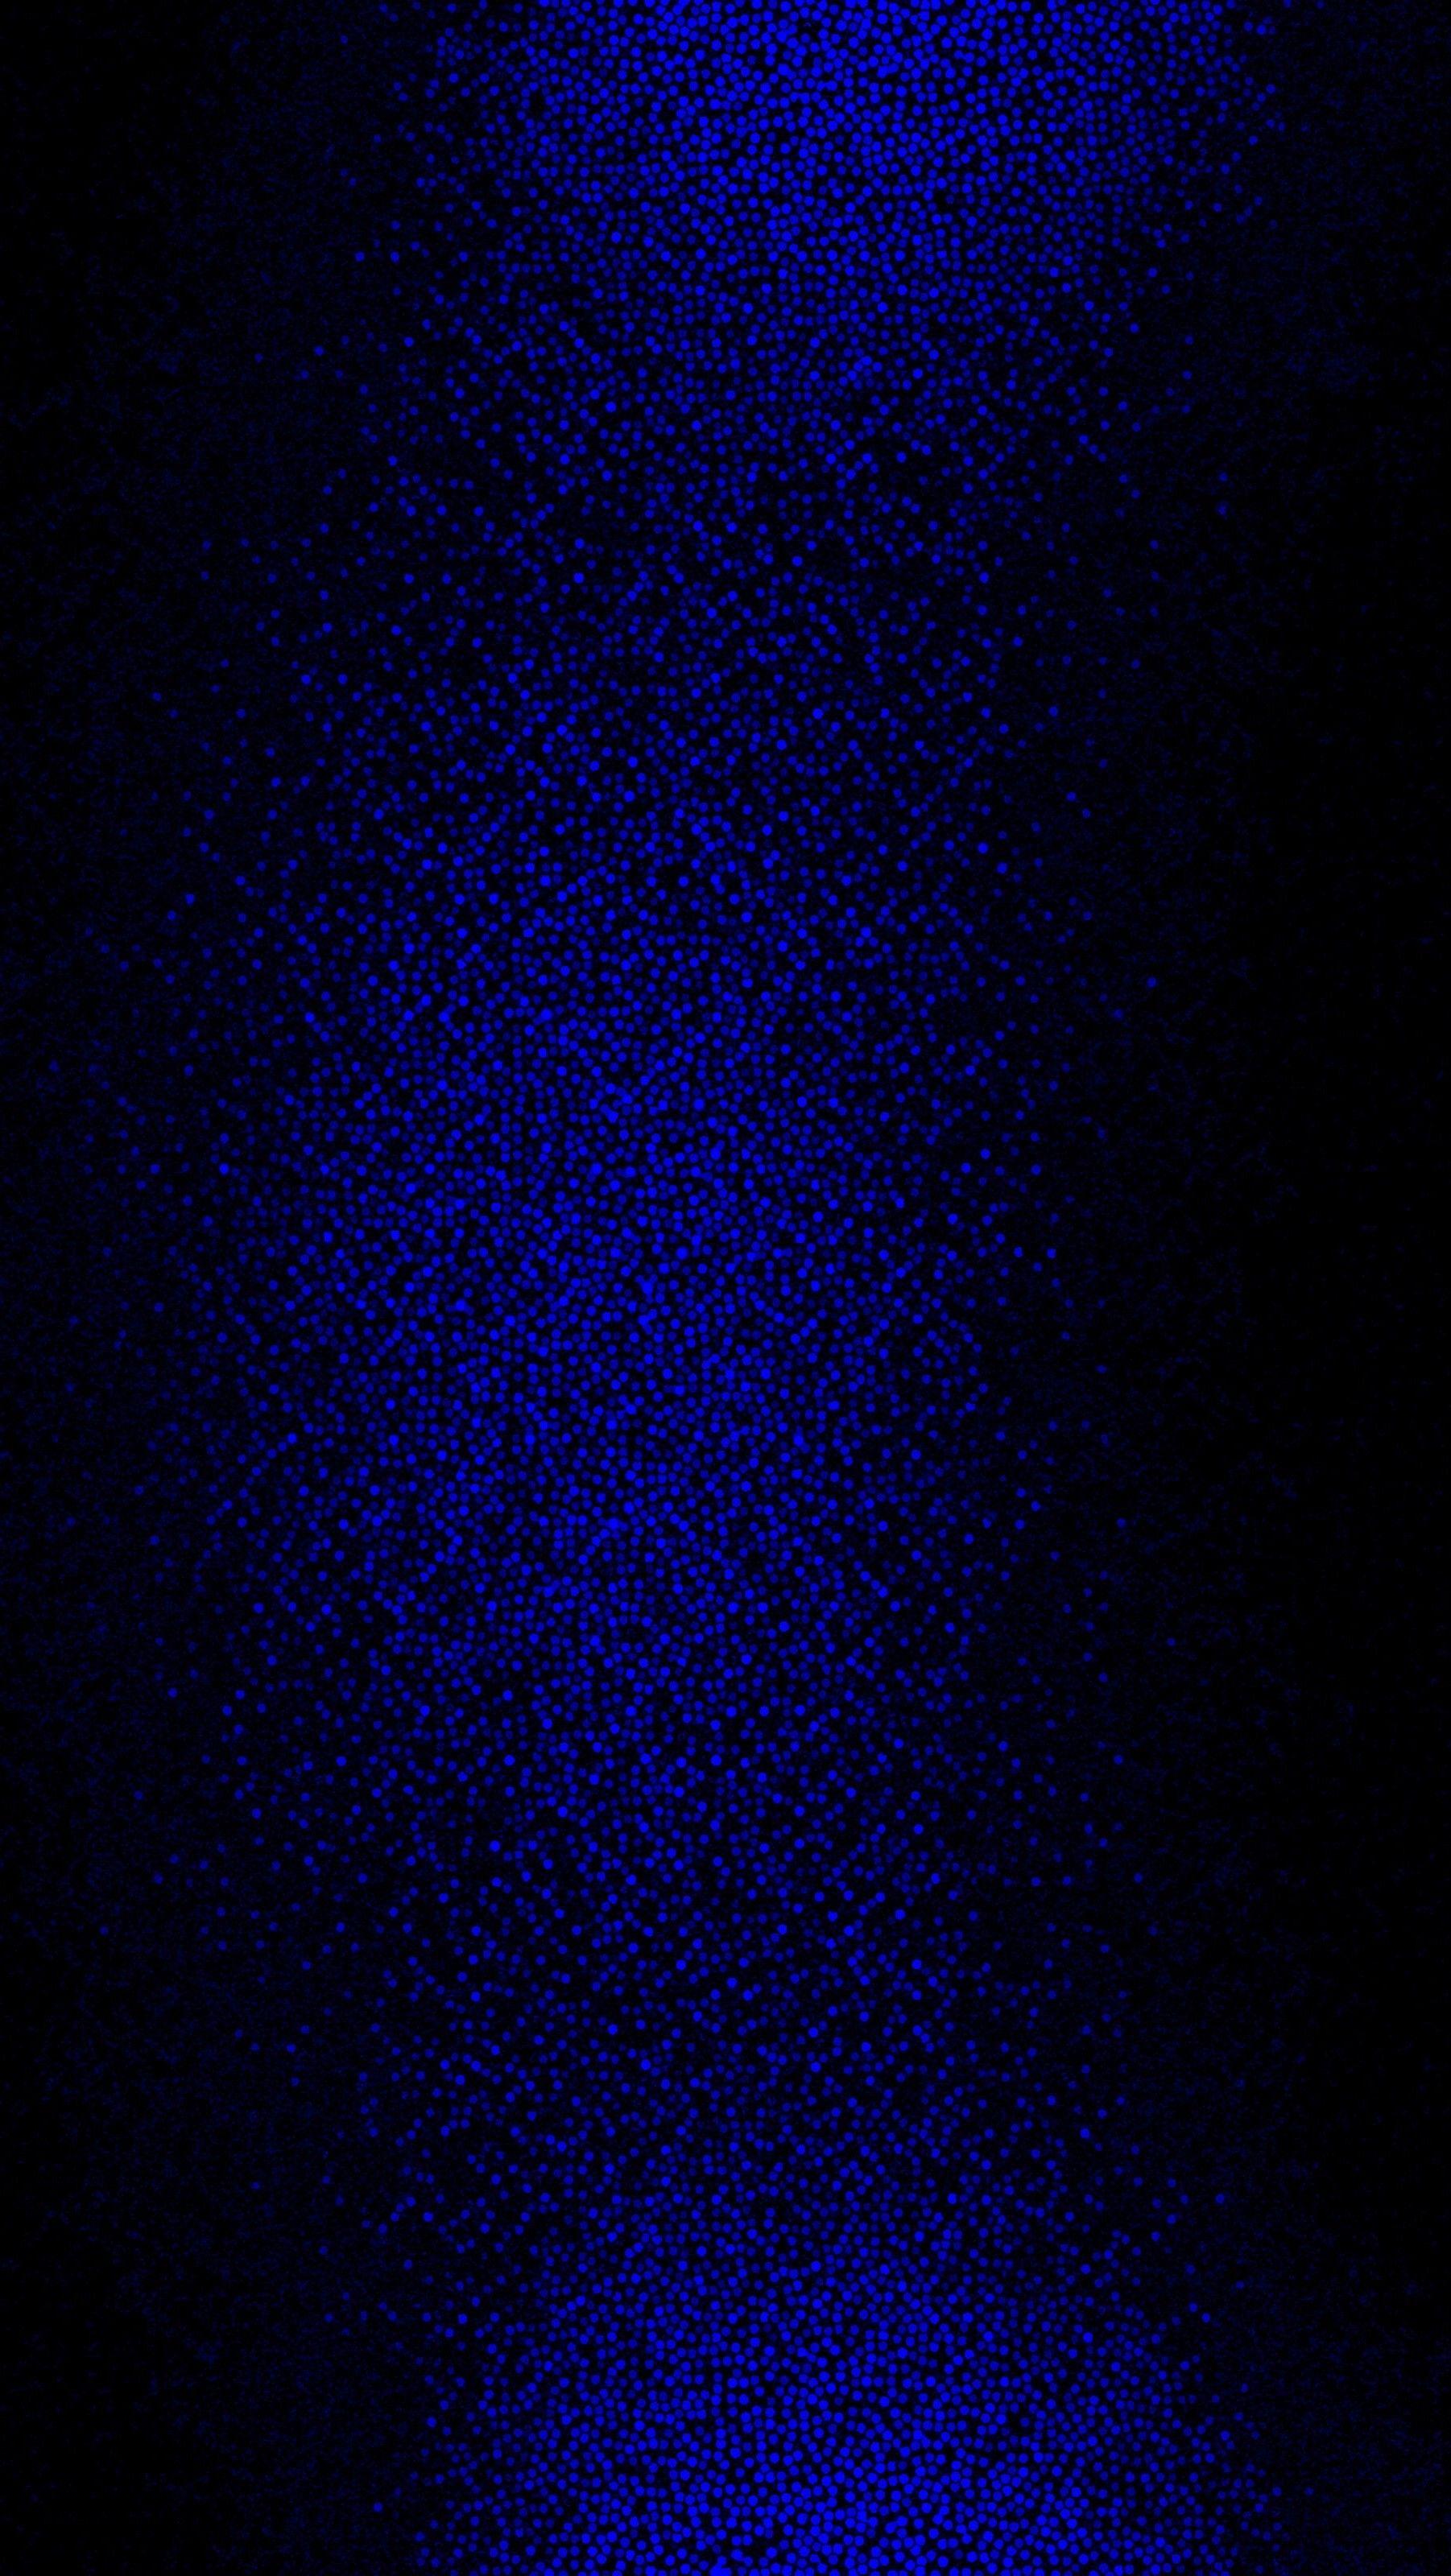 Dark Navy Blue Phone Wallpaper Wallpaper Popular Dark Navy Blue Phone Wallpaper Background